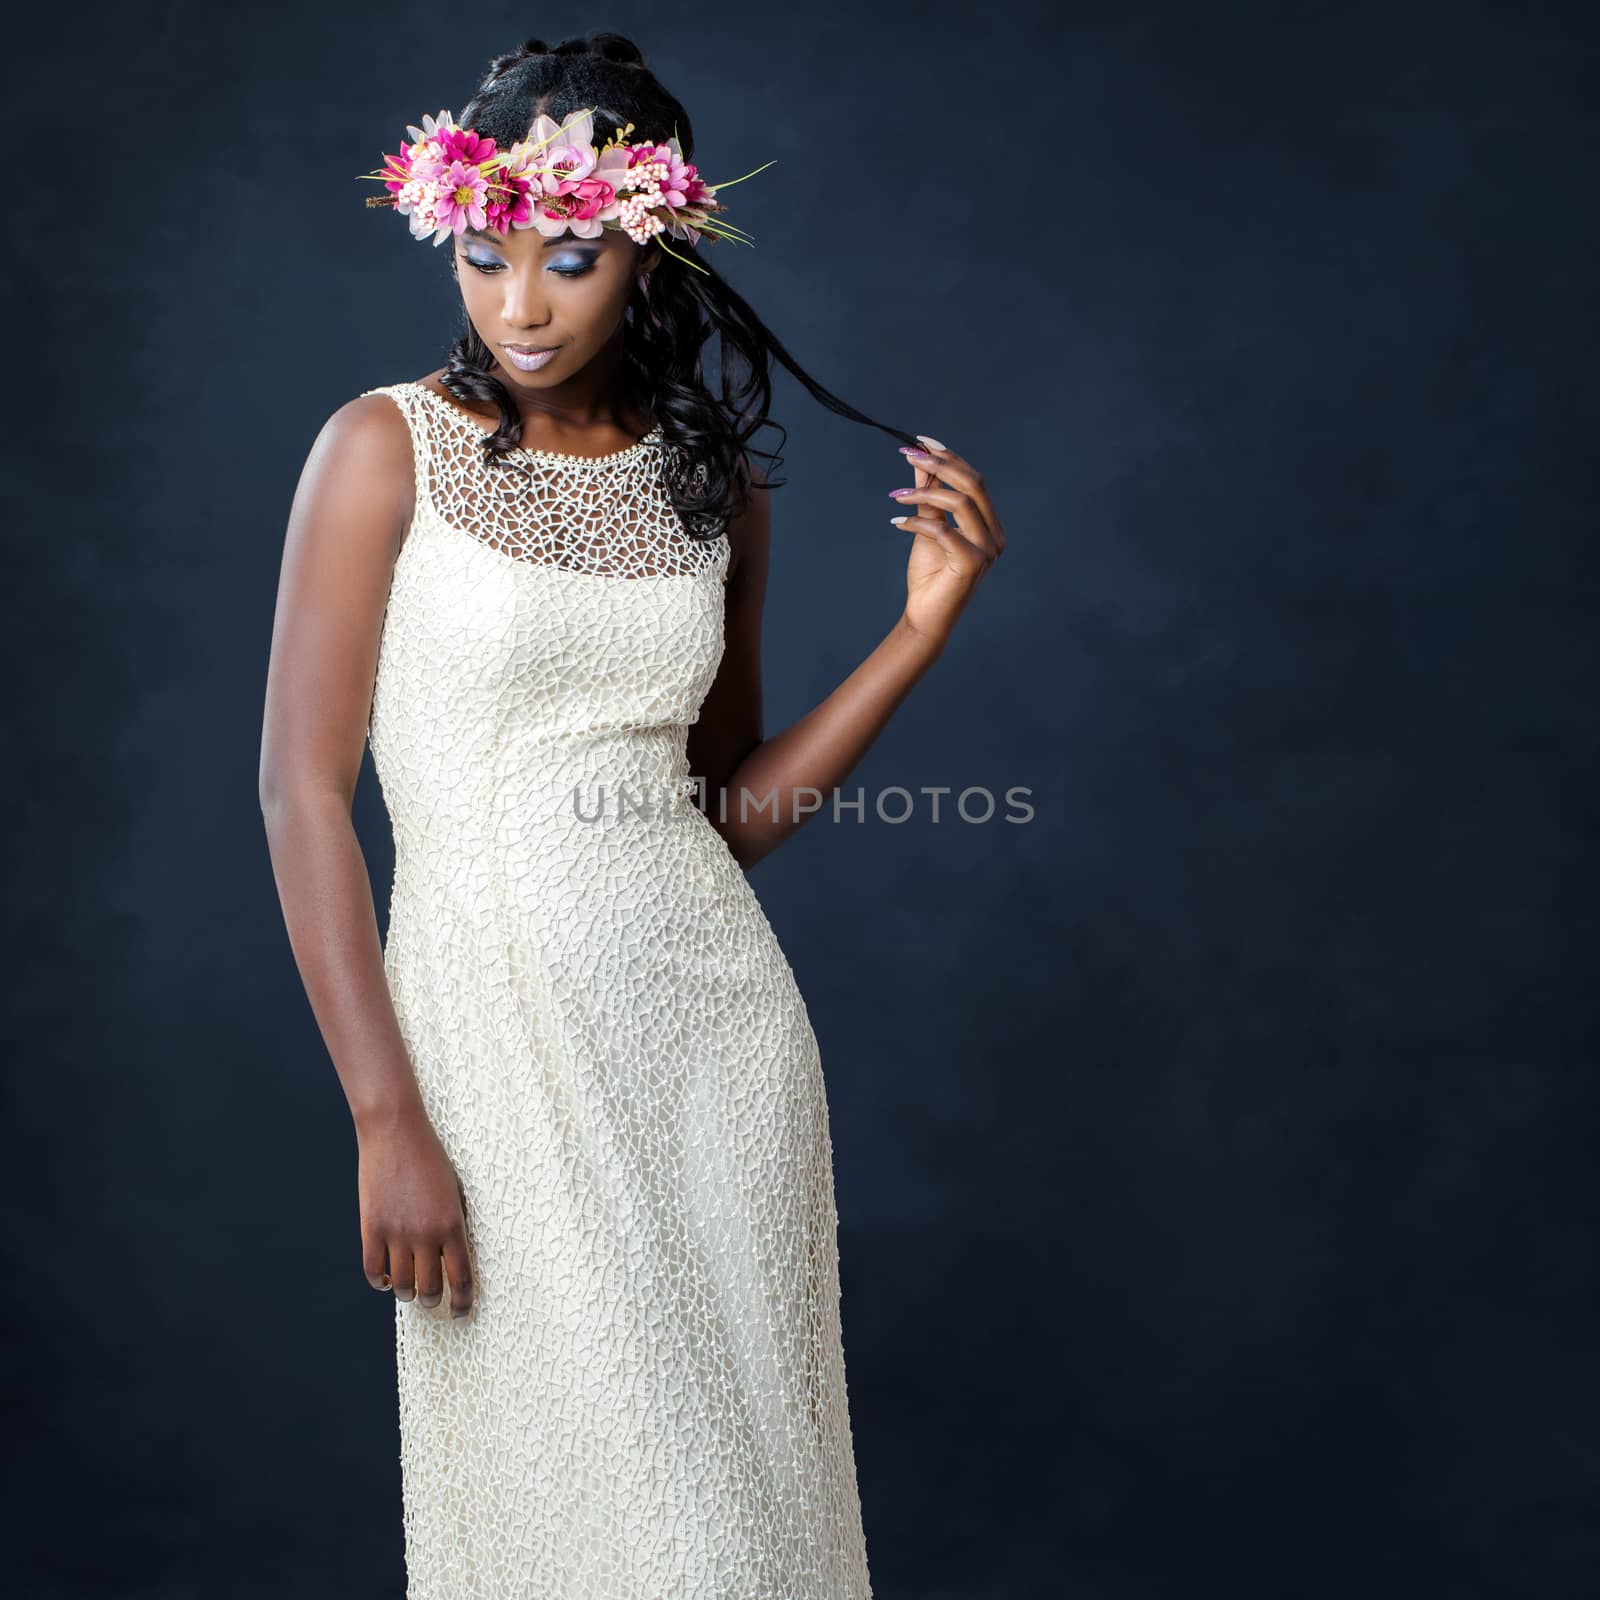 Close up studio portrait of elegant young african bride wearing colorful flower garland.Woman on white designer wedding dress against dark background.